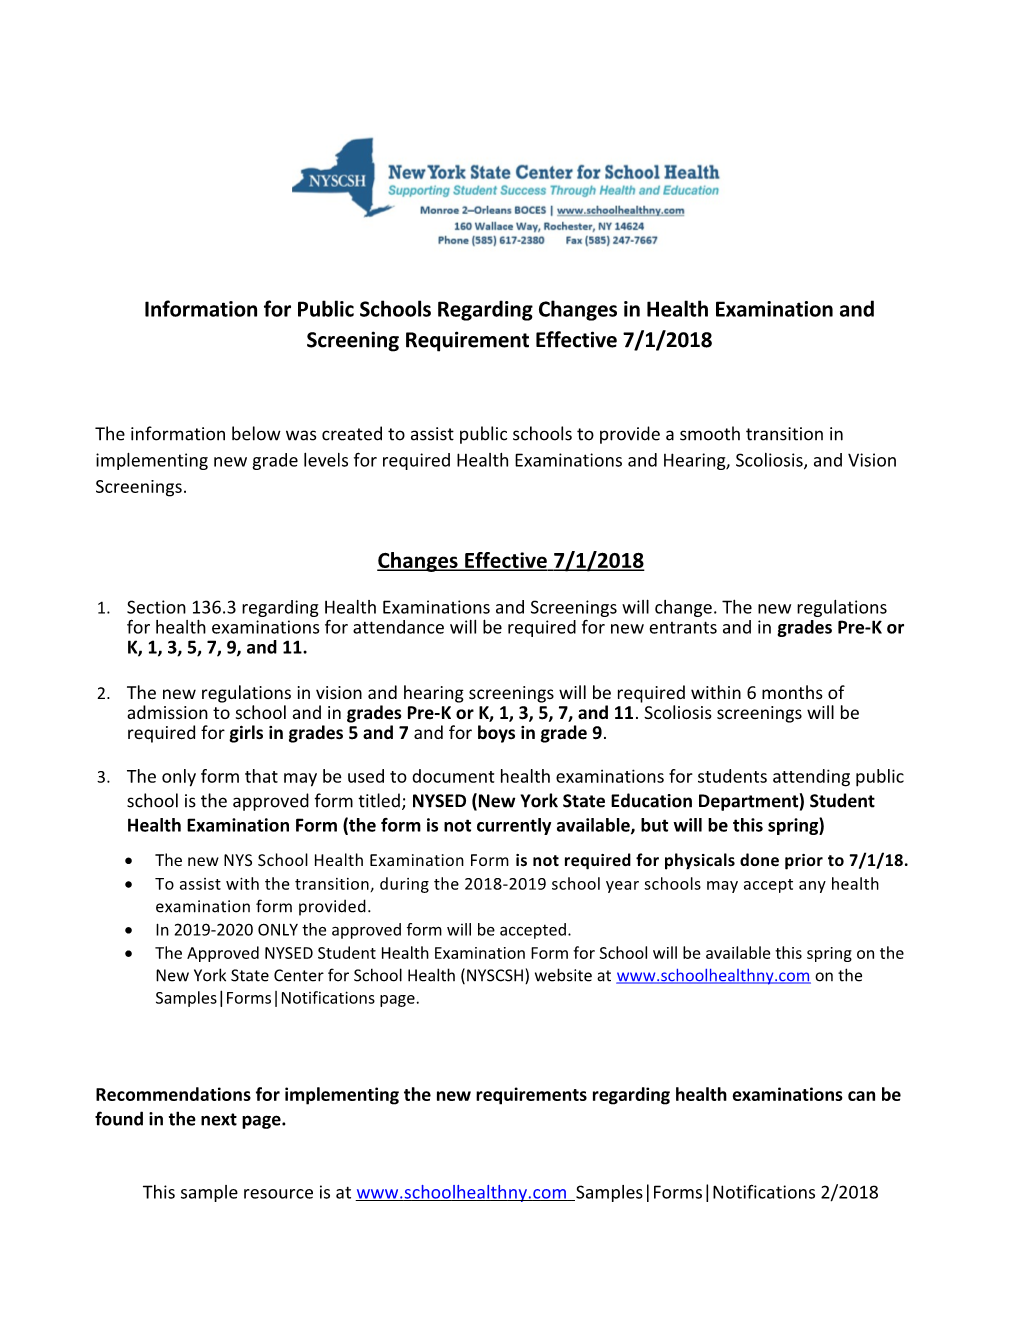 Information for Public Schoolsregarding Changes in Health Examination and Screening Requirement